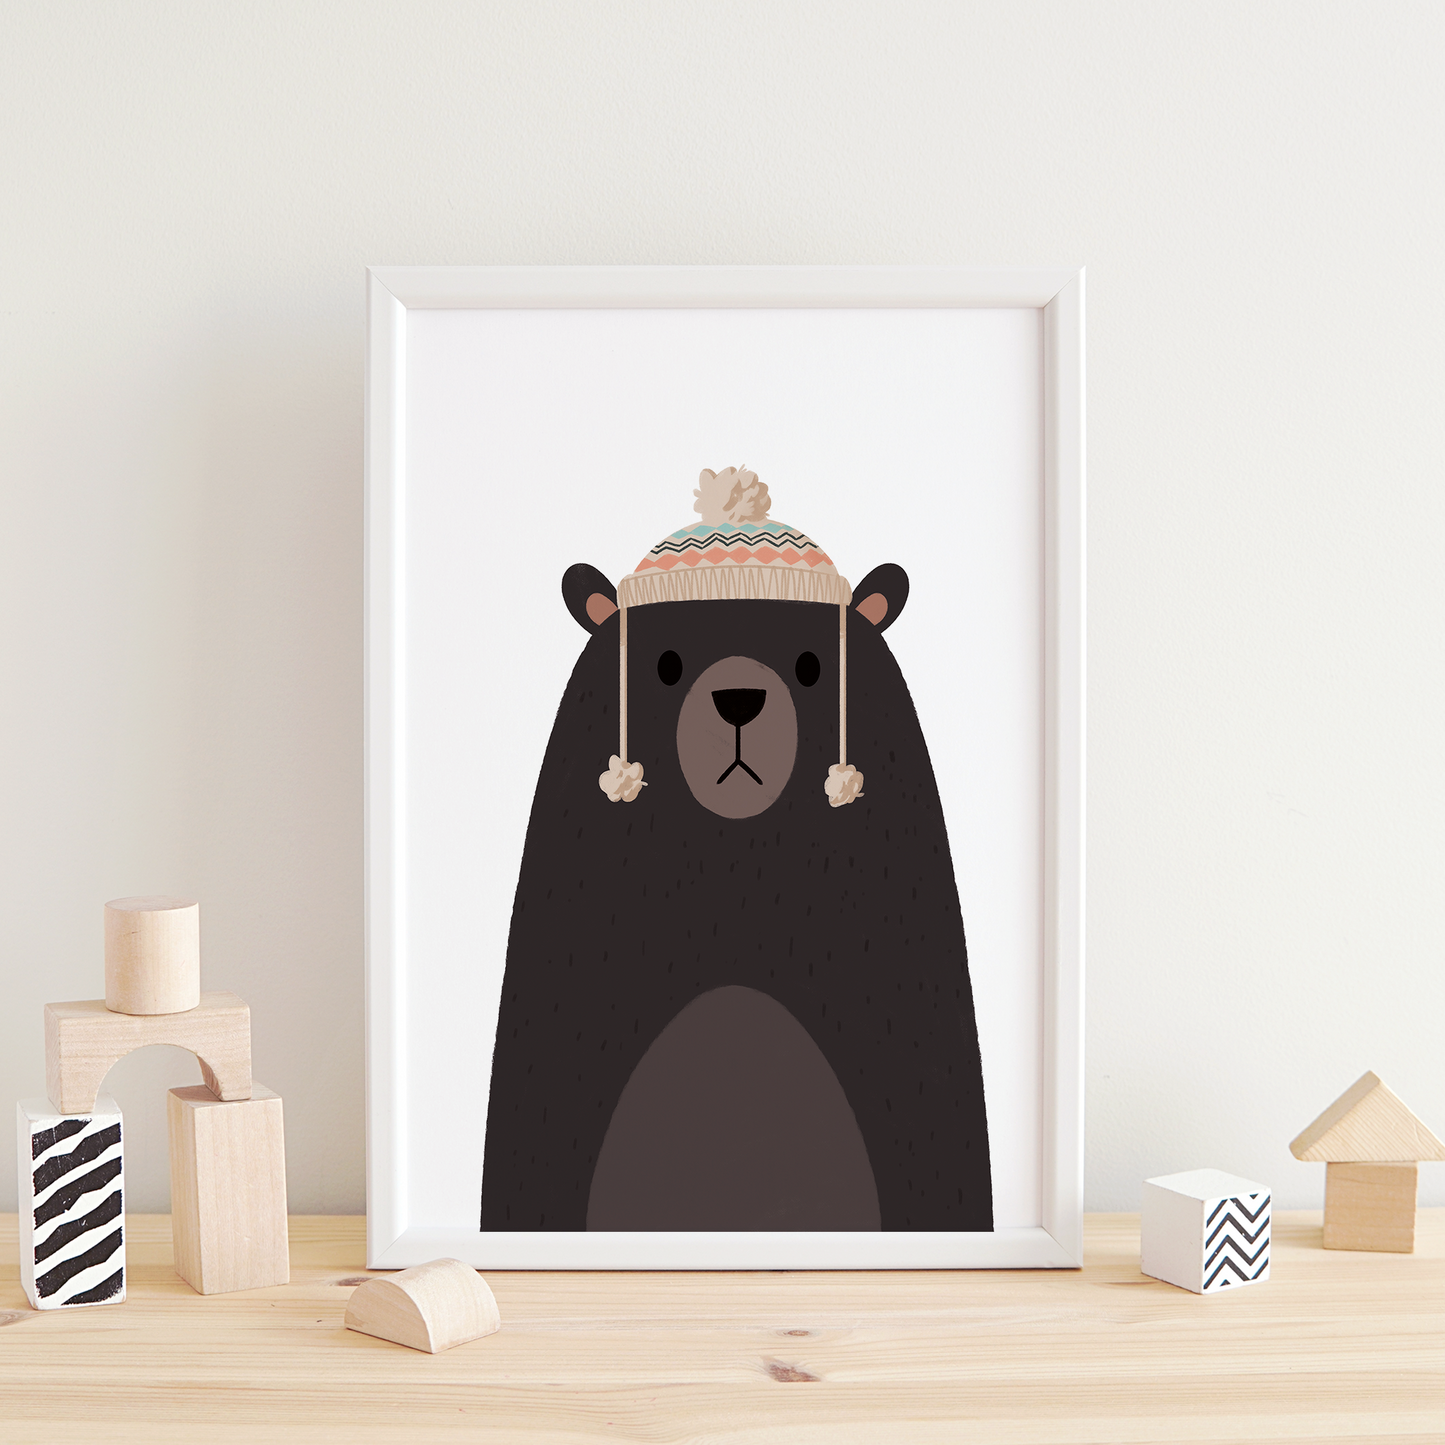 Hipster bear nursery wallart